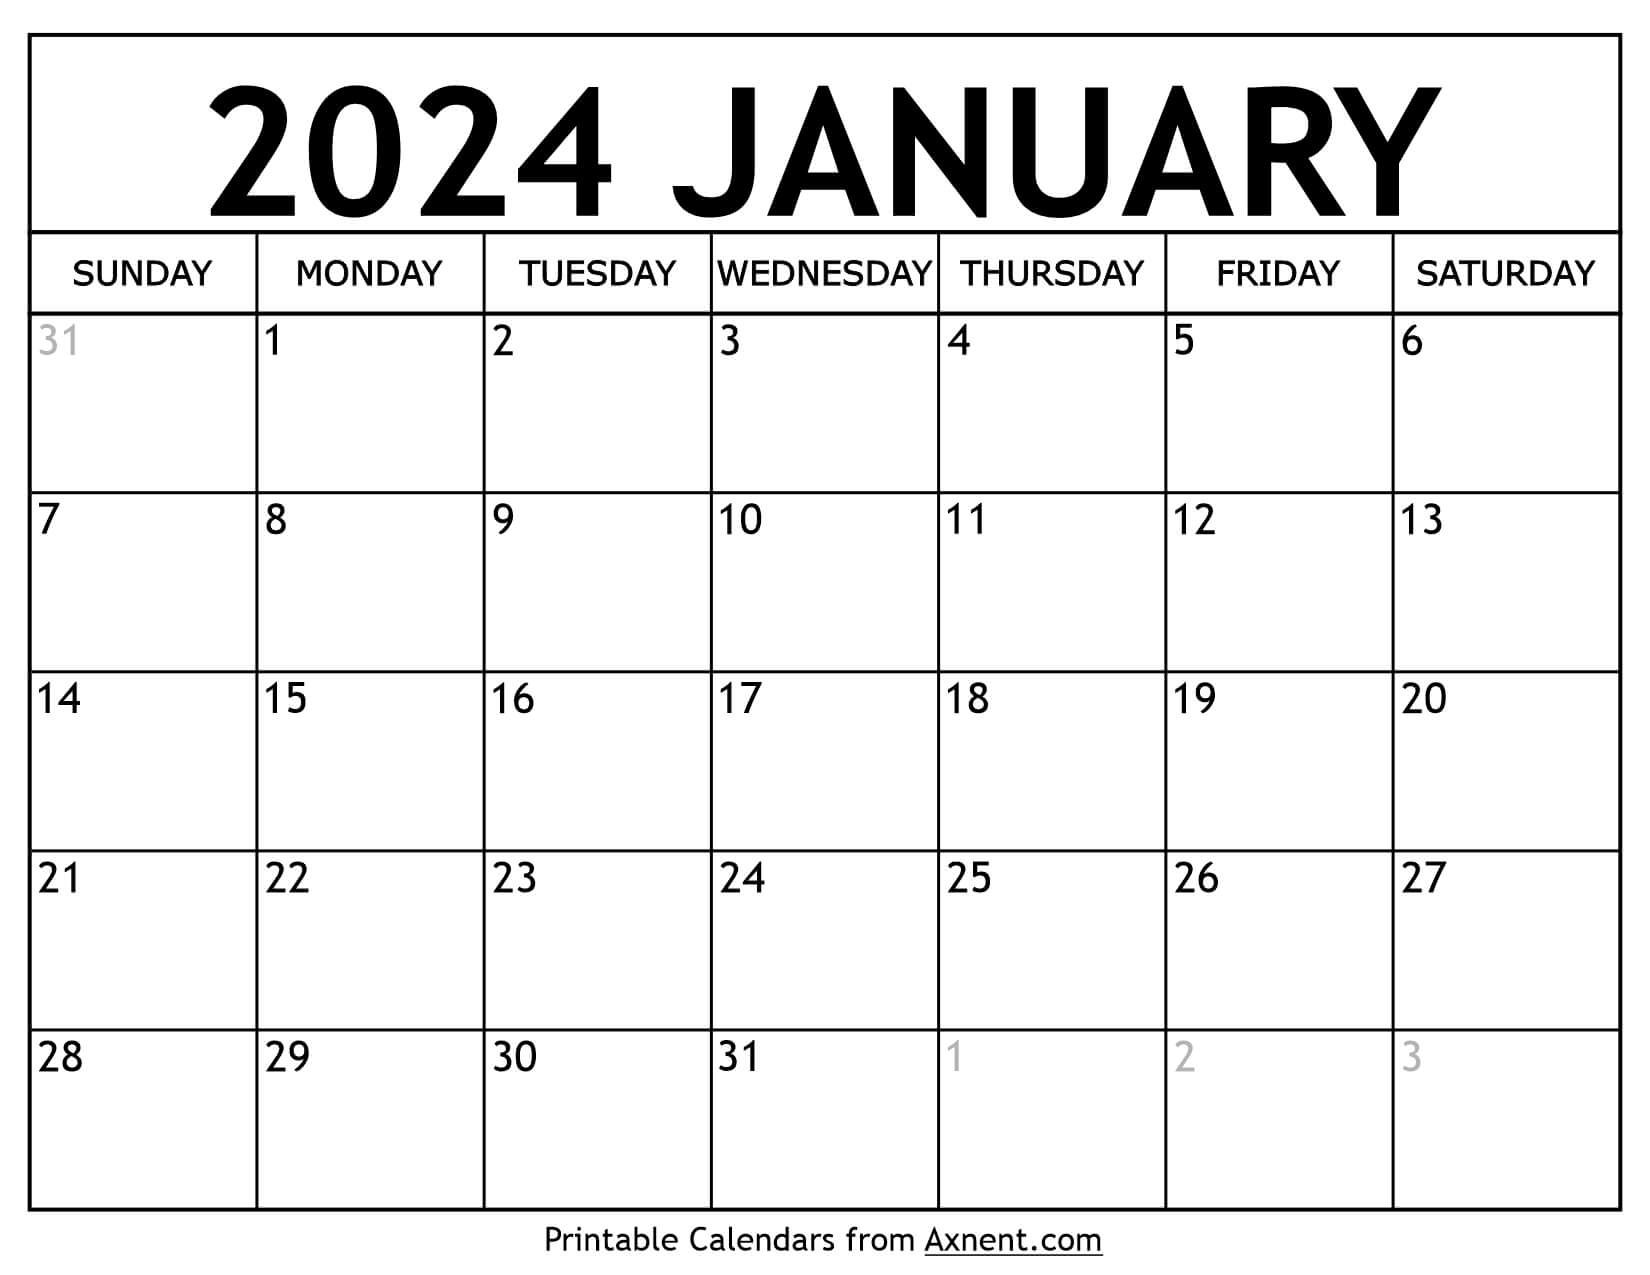 Printable January 2024 Calendar Template - Print Now for January 2024 Calendar Free Printable